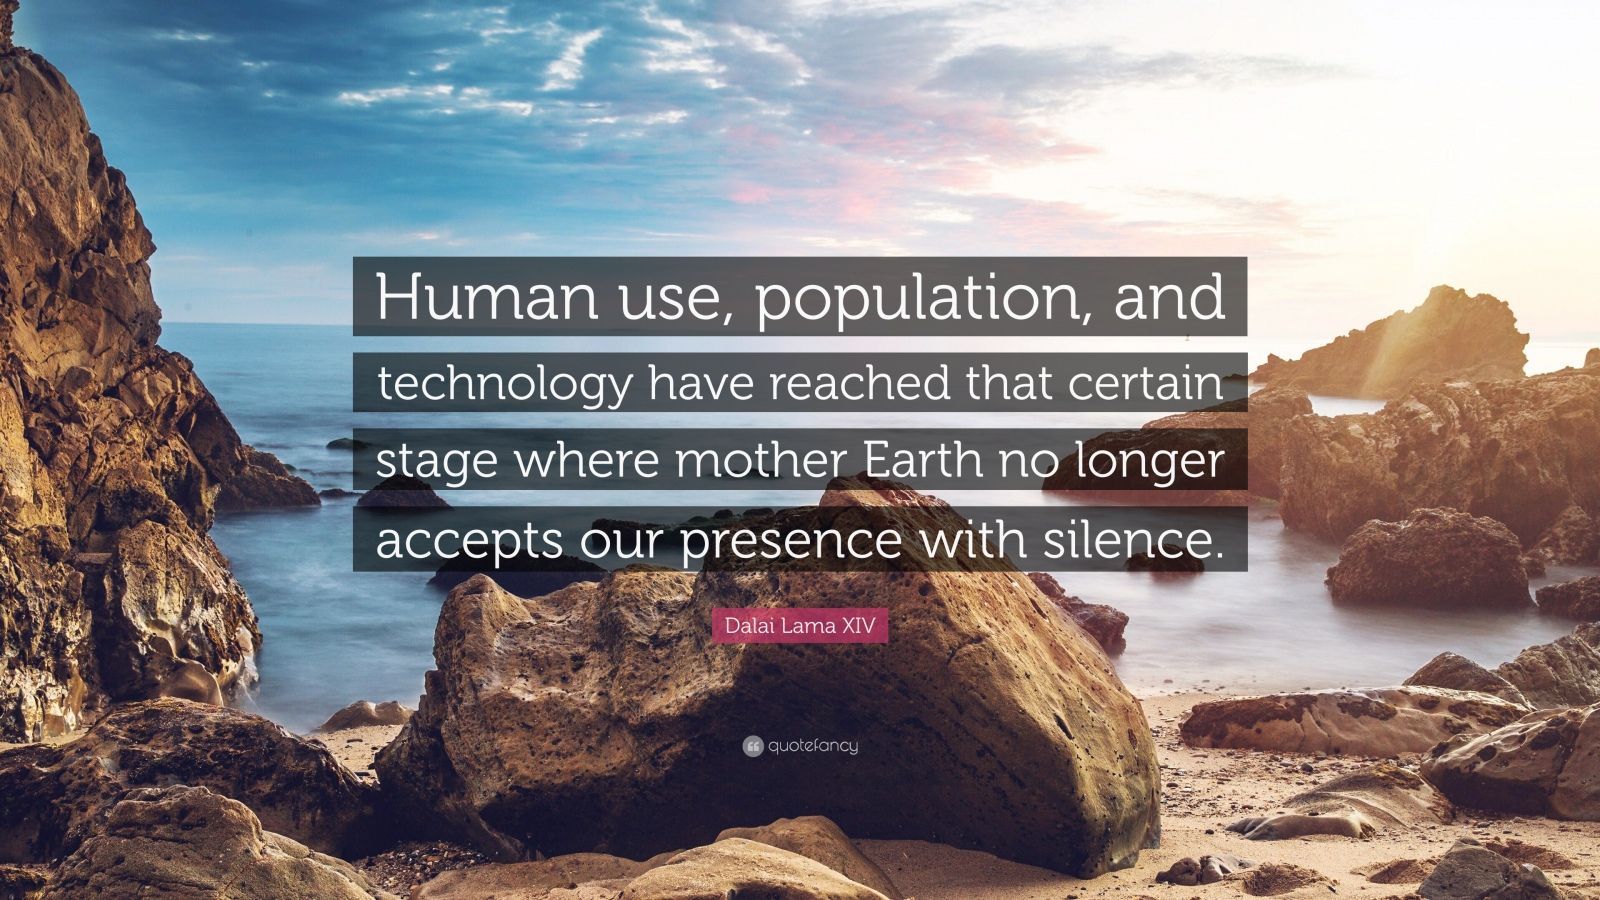 Dalai Lama XIV Quote: “Human use, population, and technology have